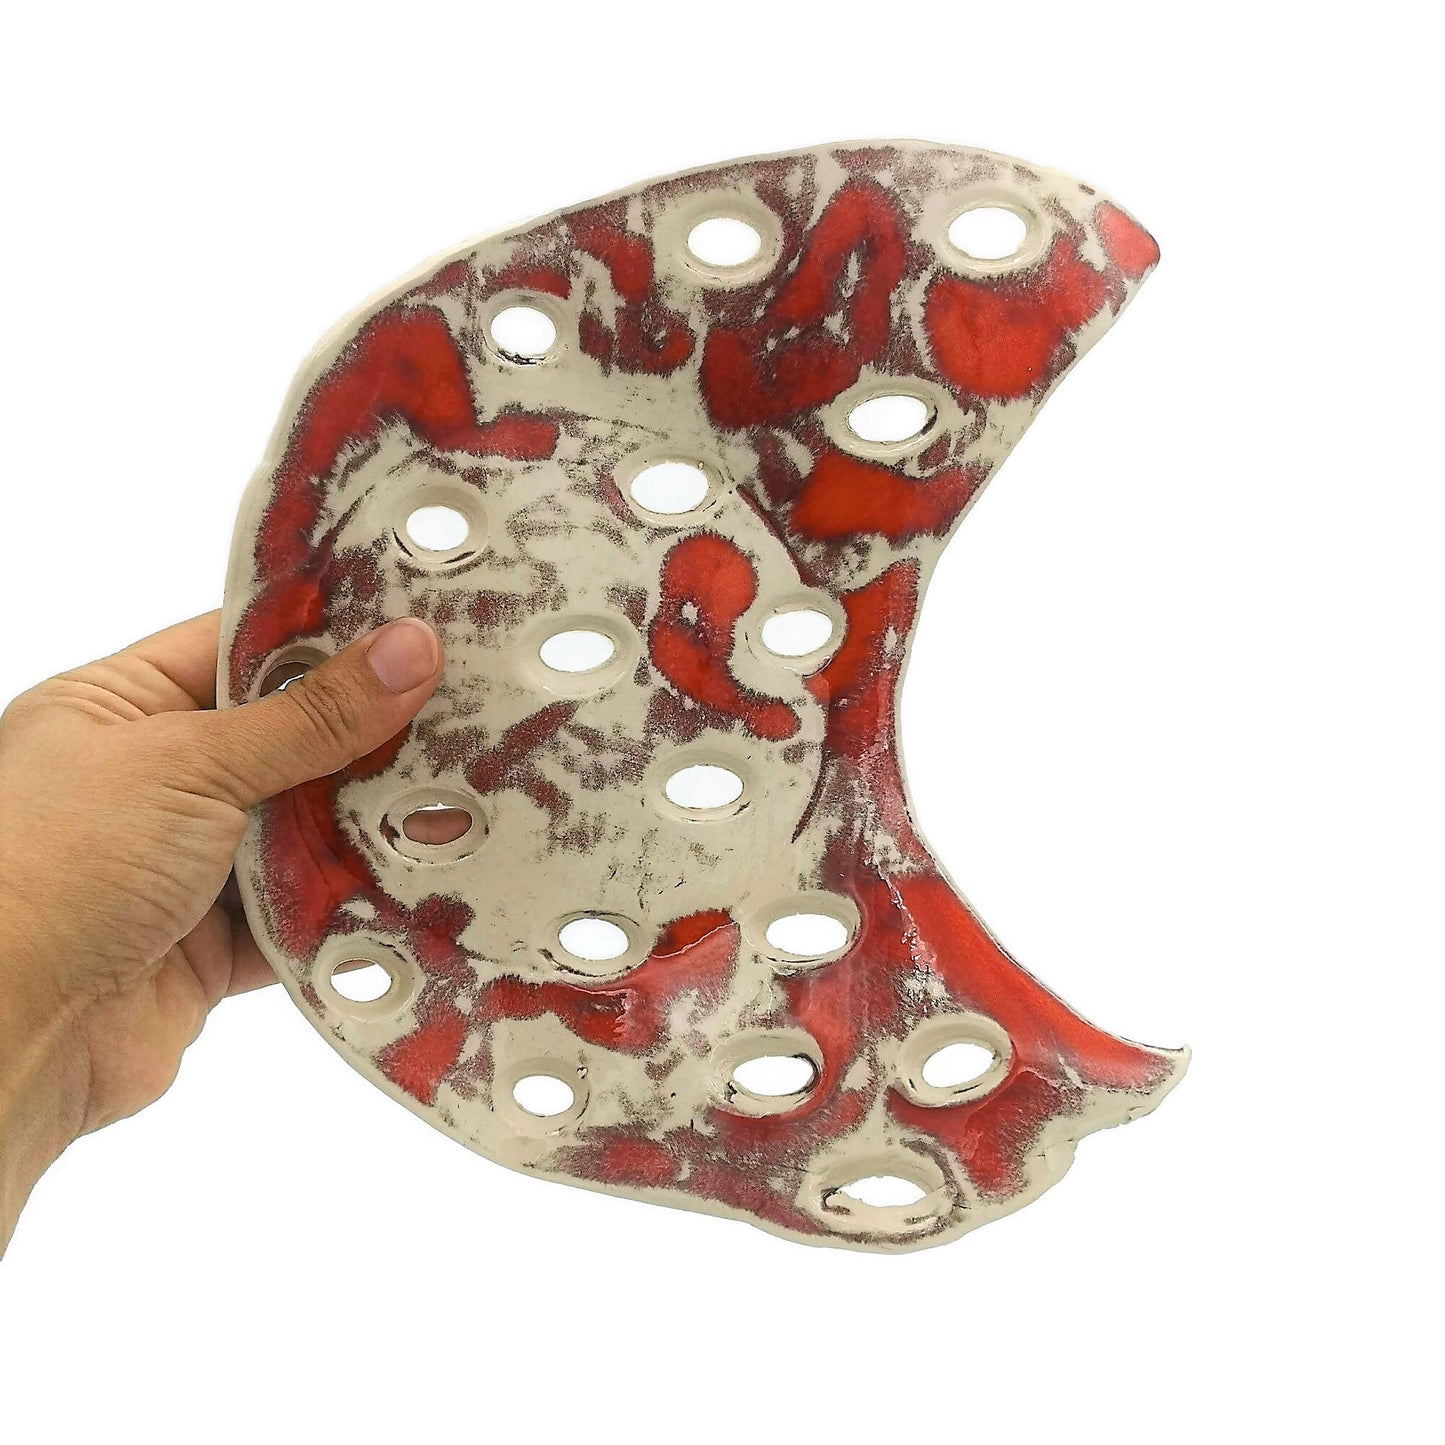 Handmade Ceramic Moon Soap Dish For Bathroom, Artisan Stoneware Lava Soap Holder With Drain, Zero Waste Decorative Accessories - Ceramica Ana Rafael